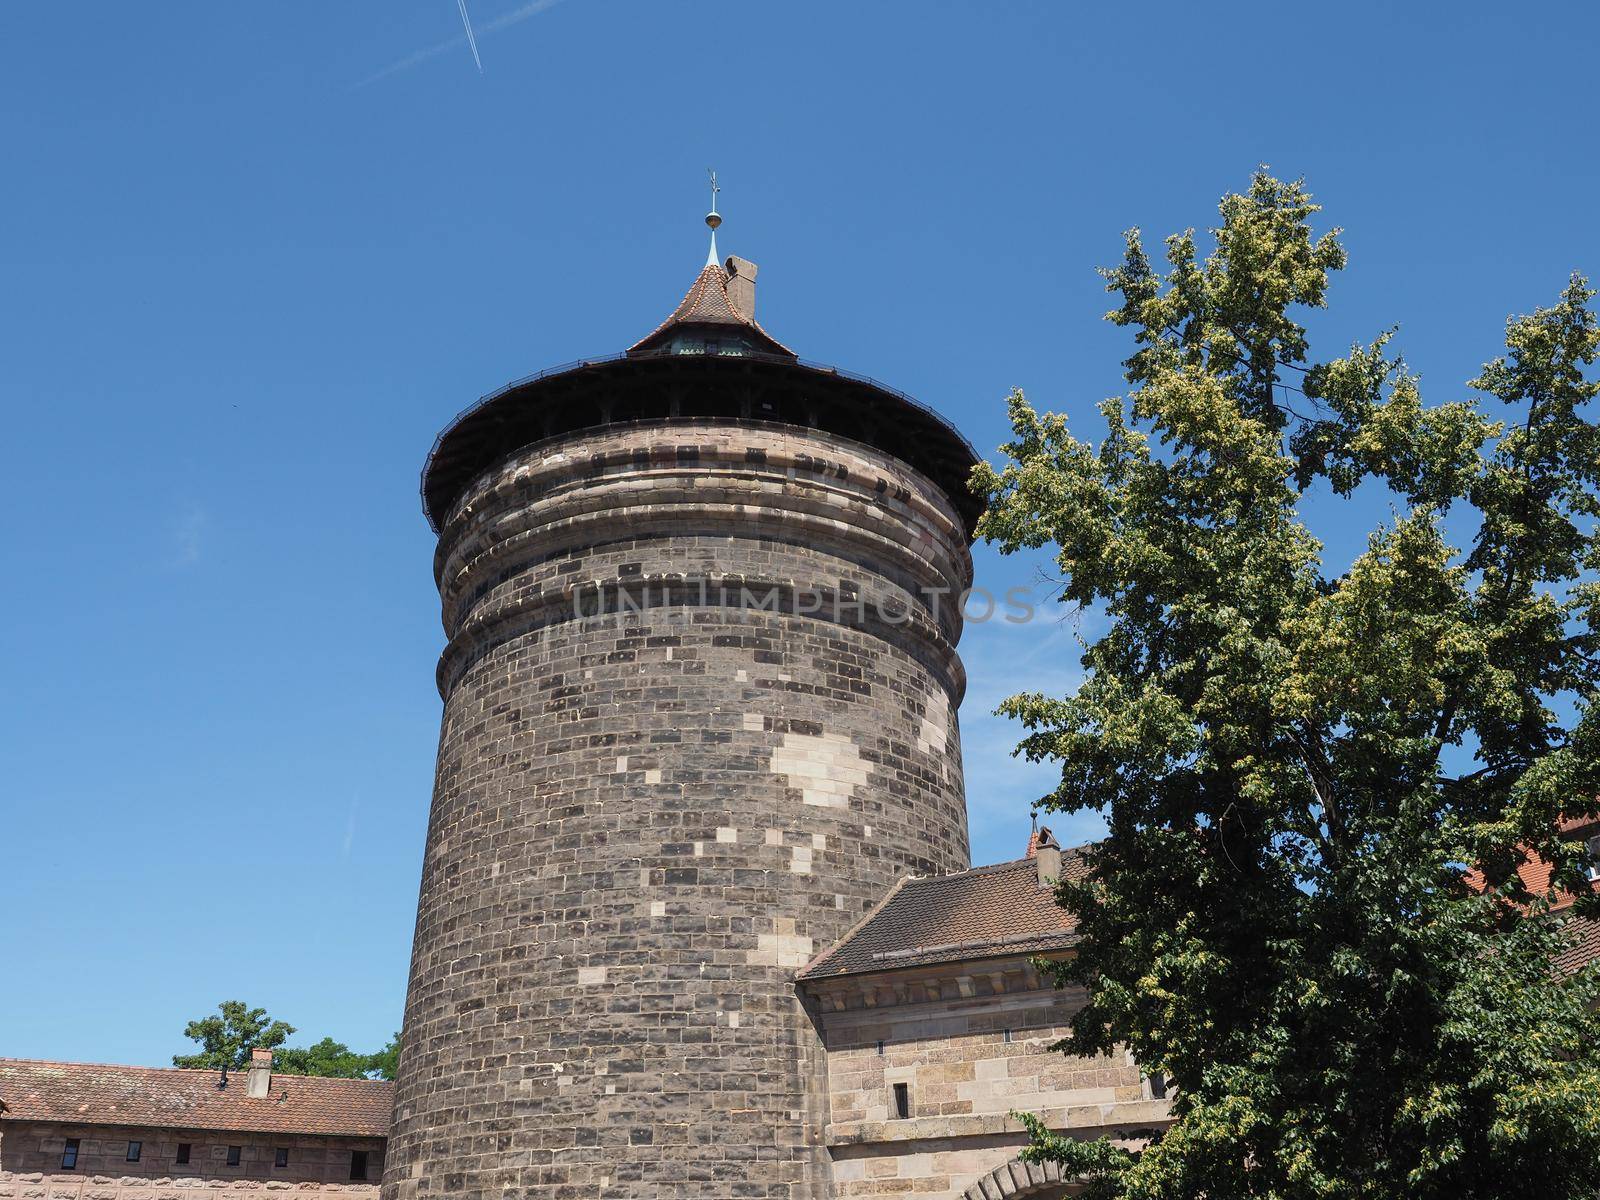 Spittlertor tower in Nuernberg by claudiodivizia